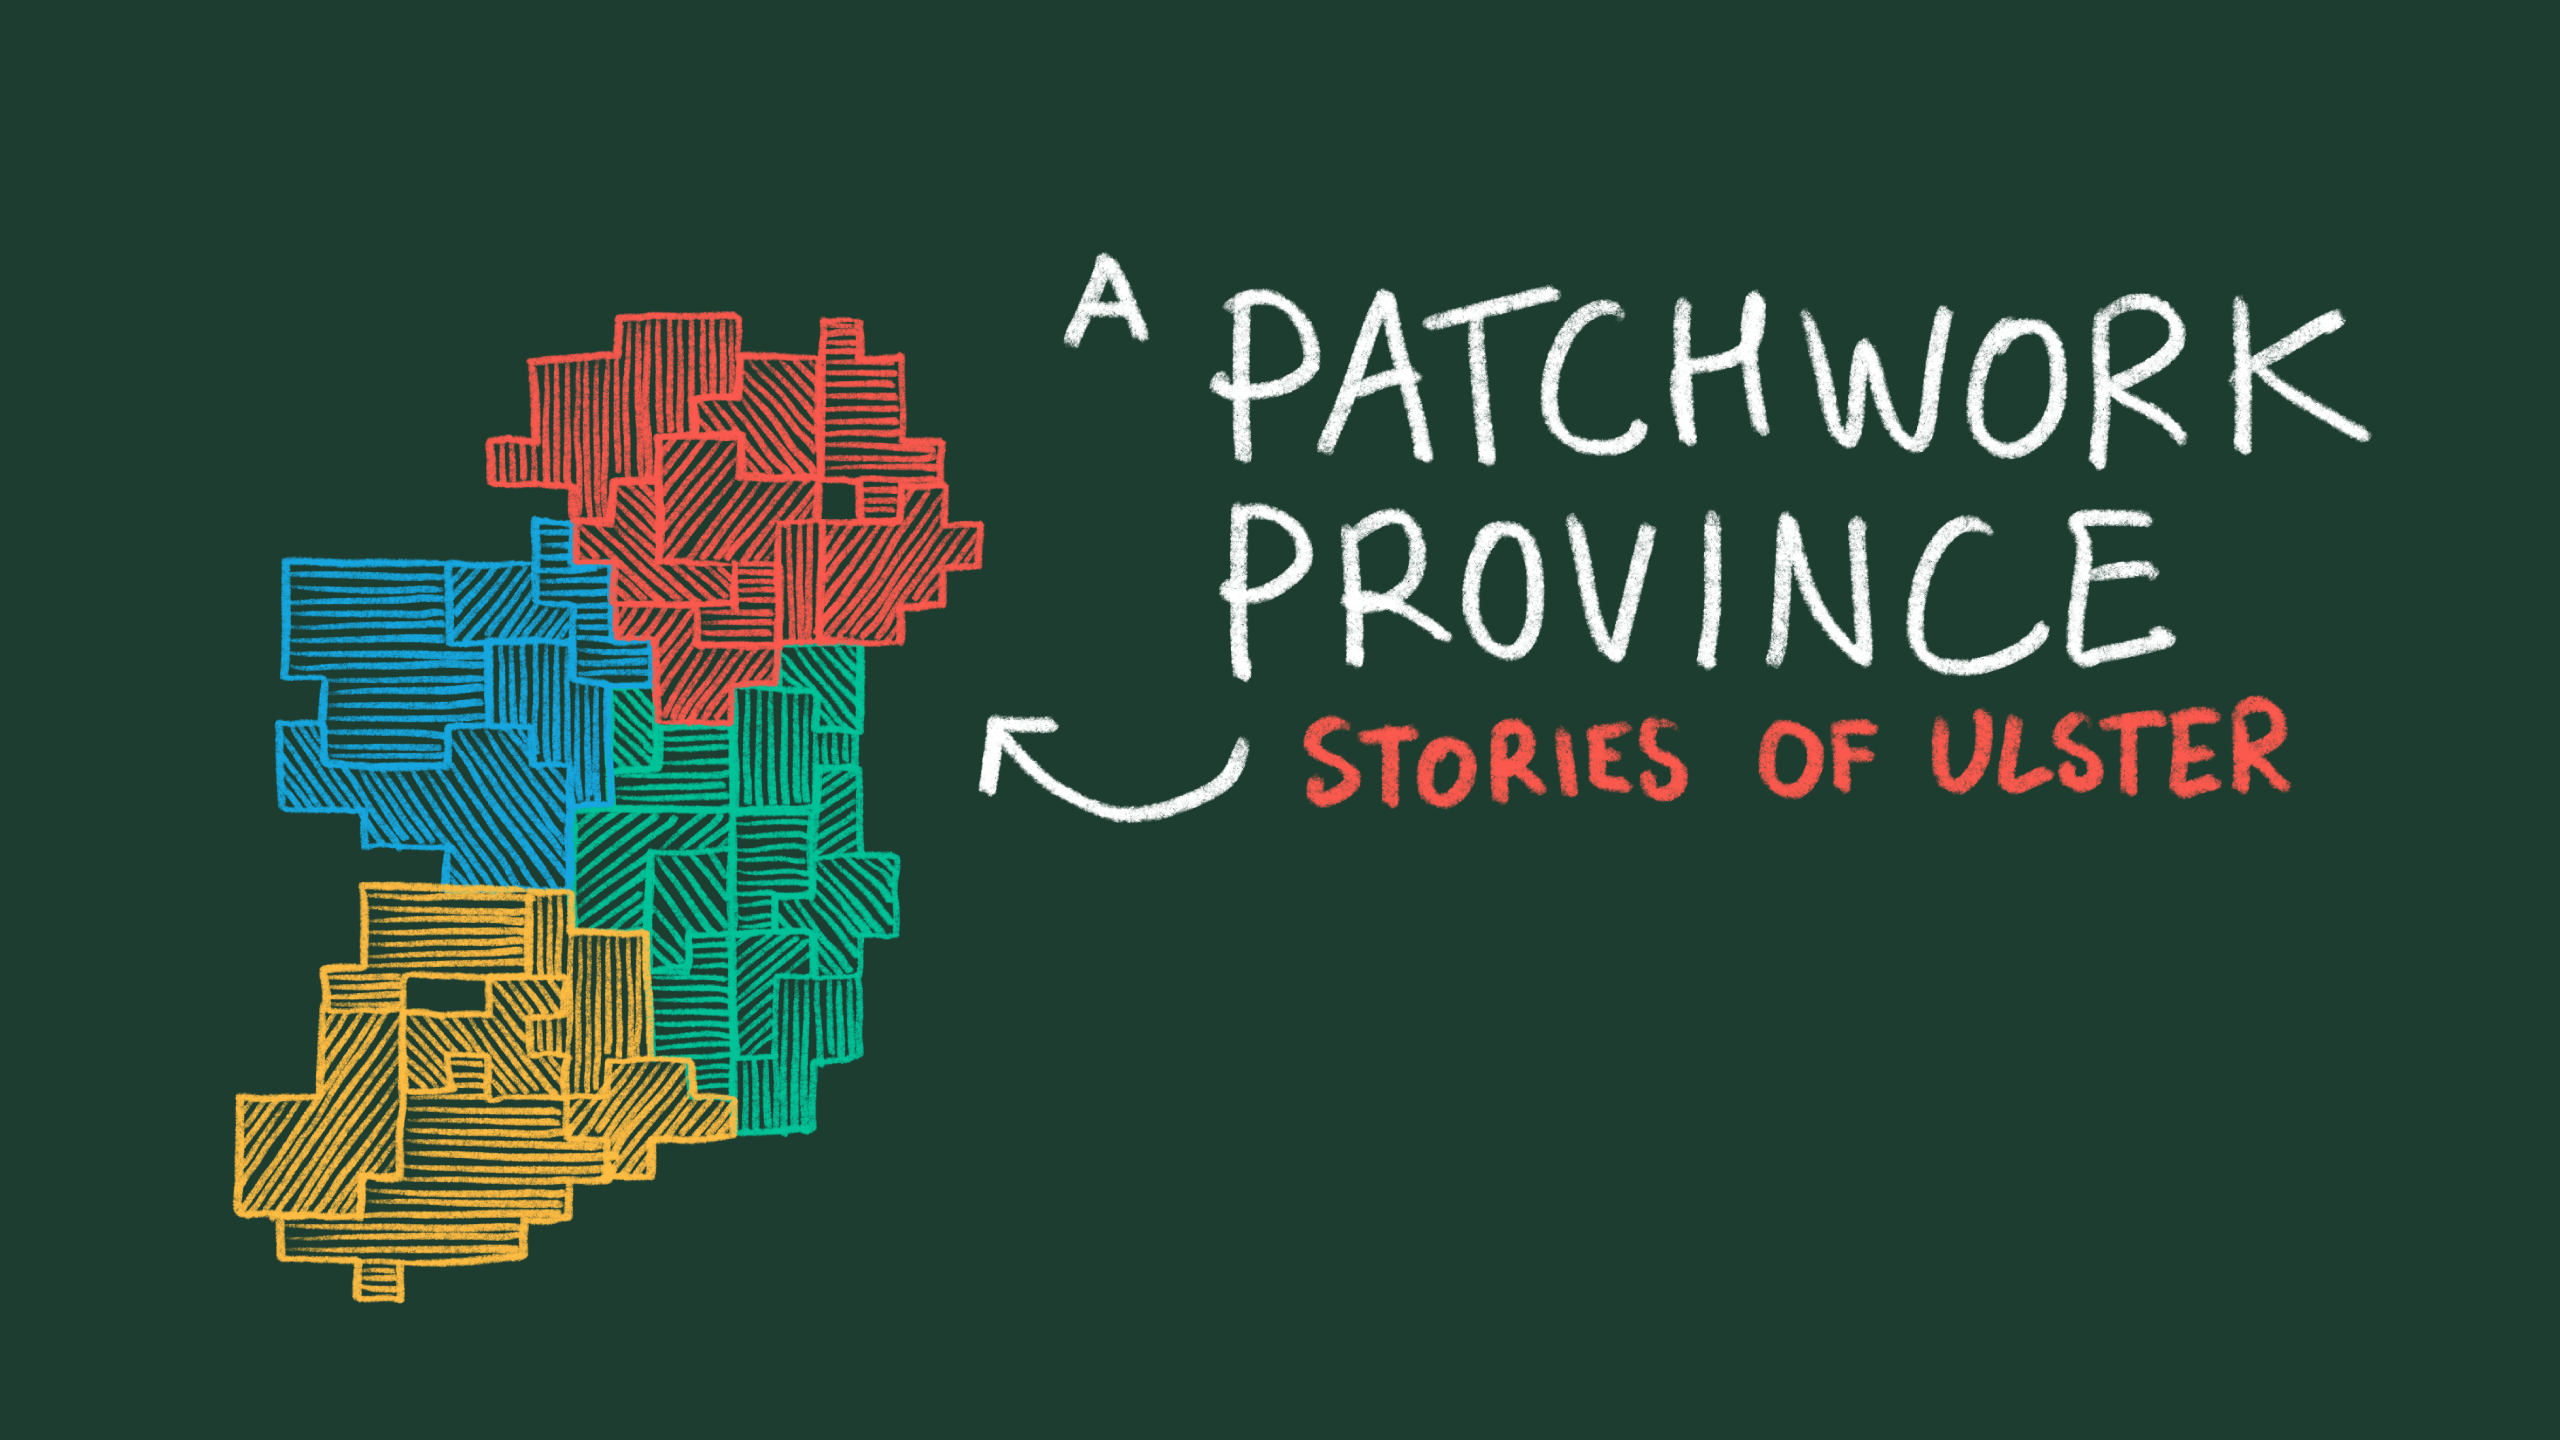 A Patchwork Province